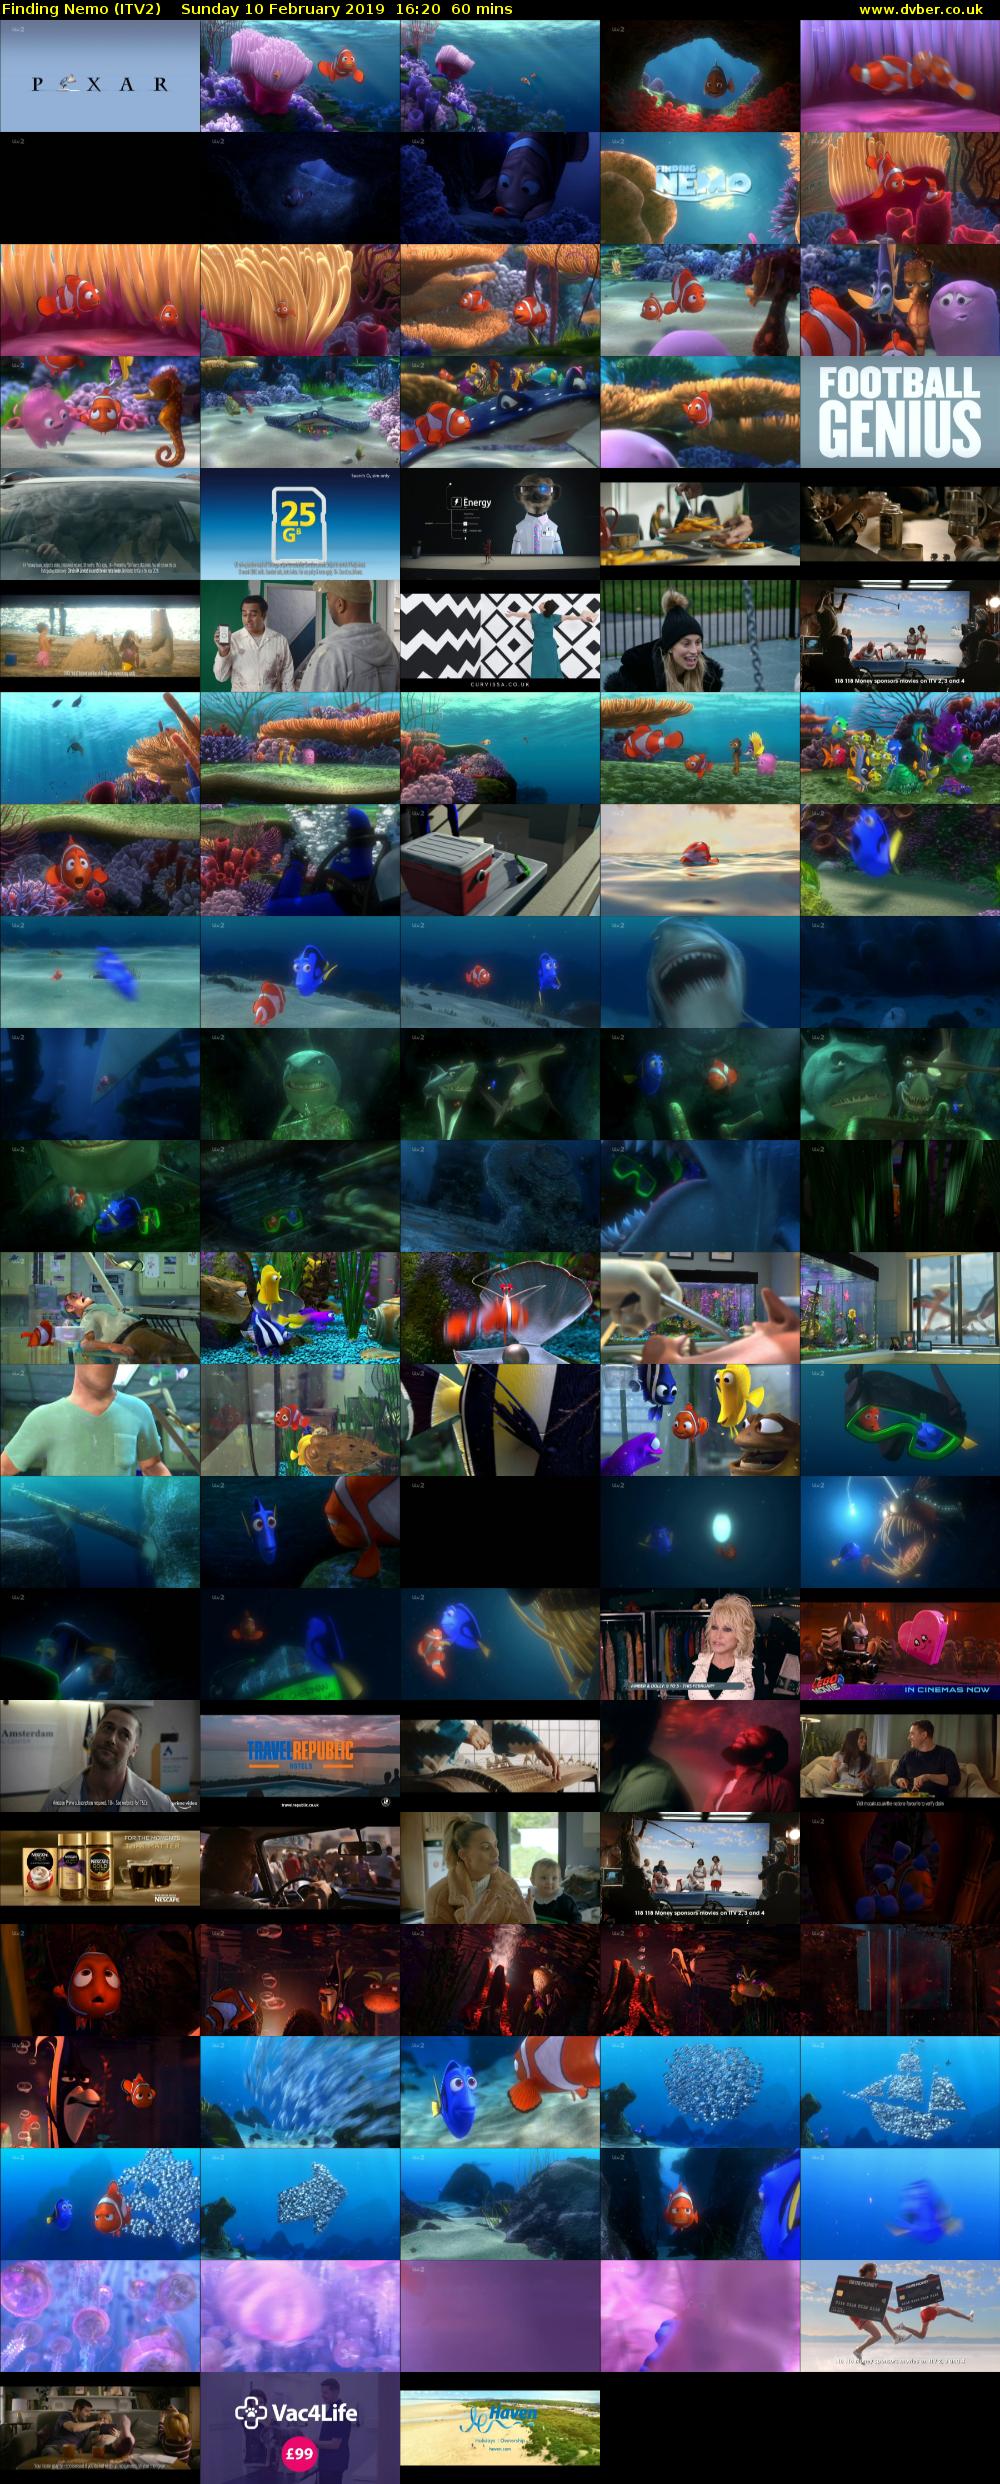 Finding Nemo (ITV2) Sunday 10 February 2019 16:20 - 17:20